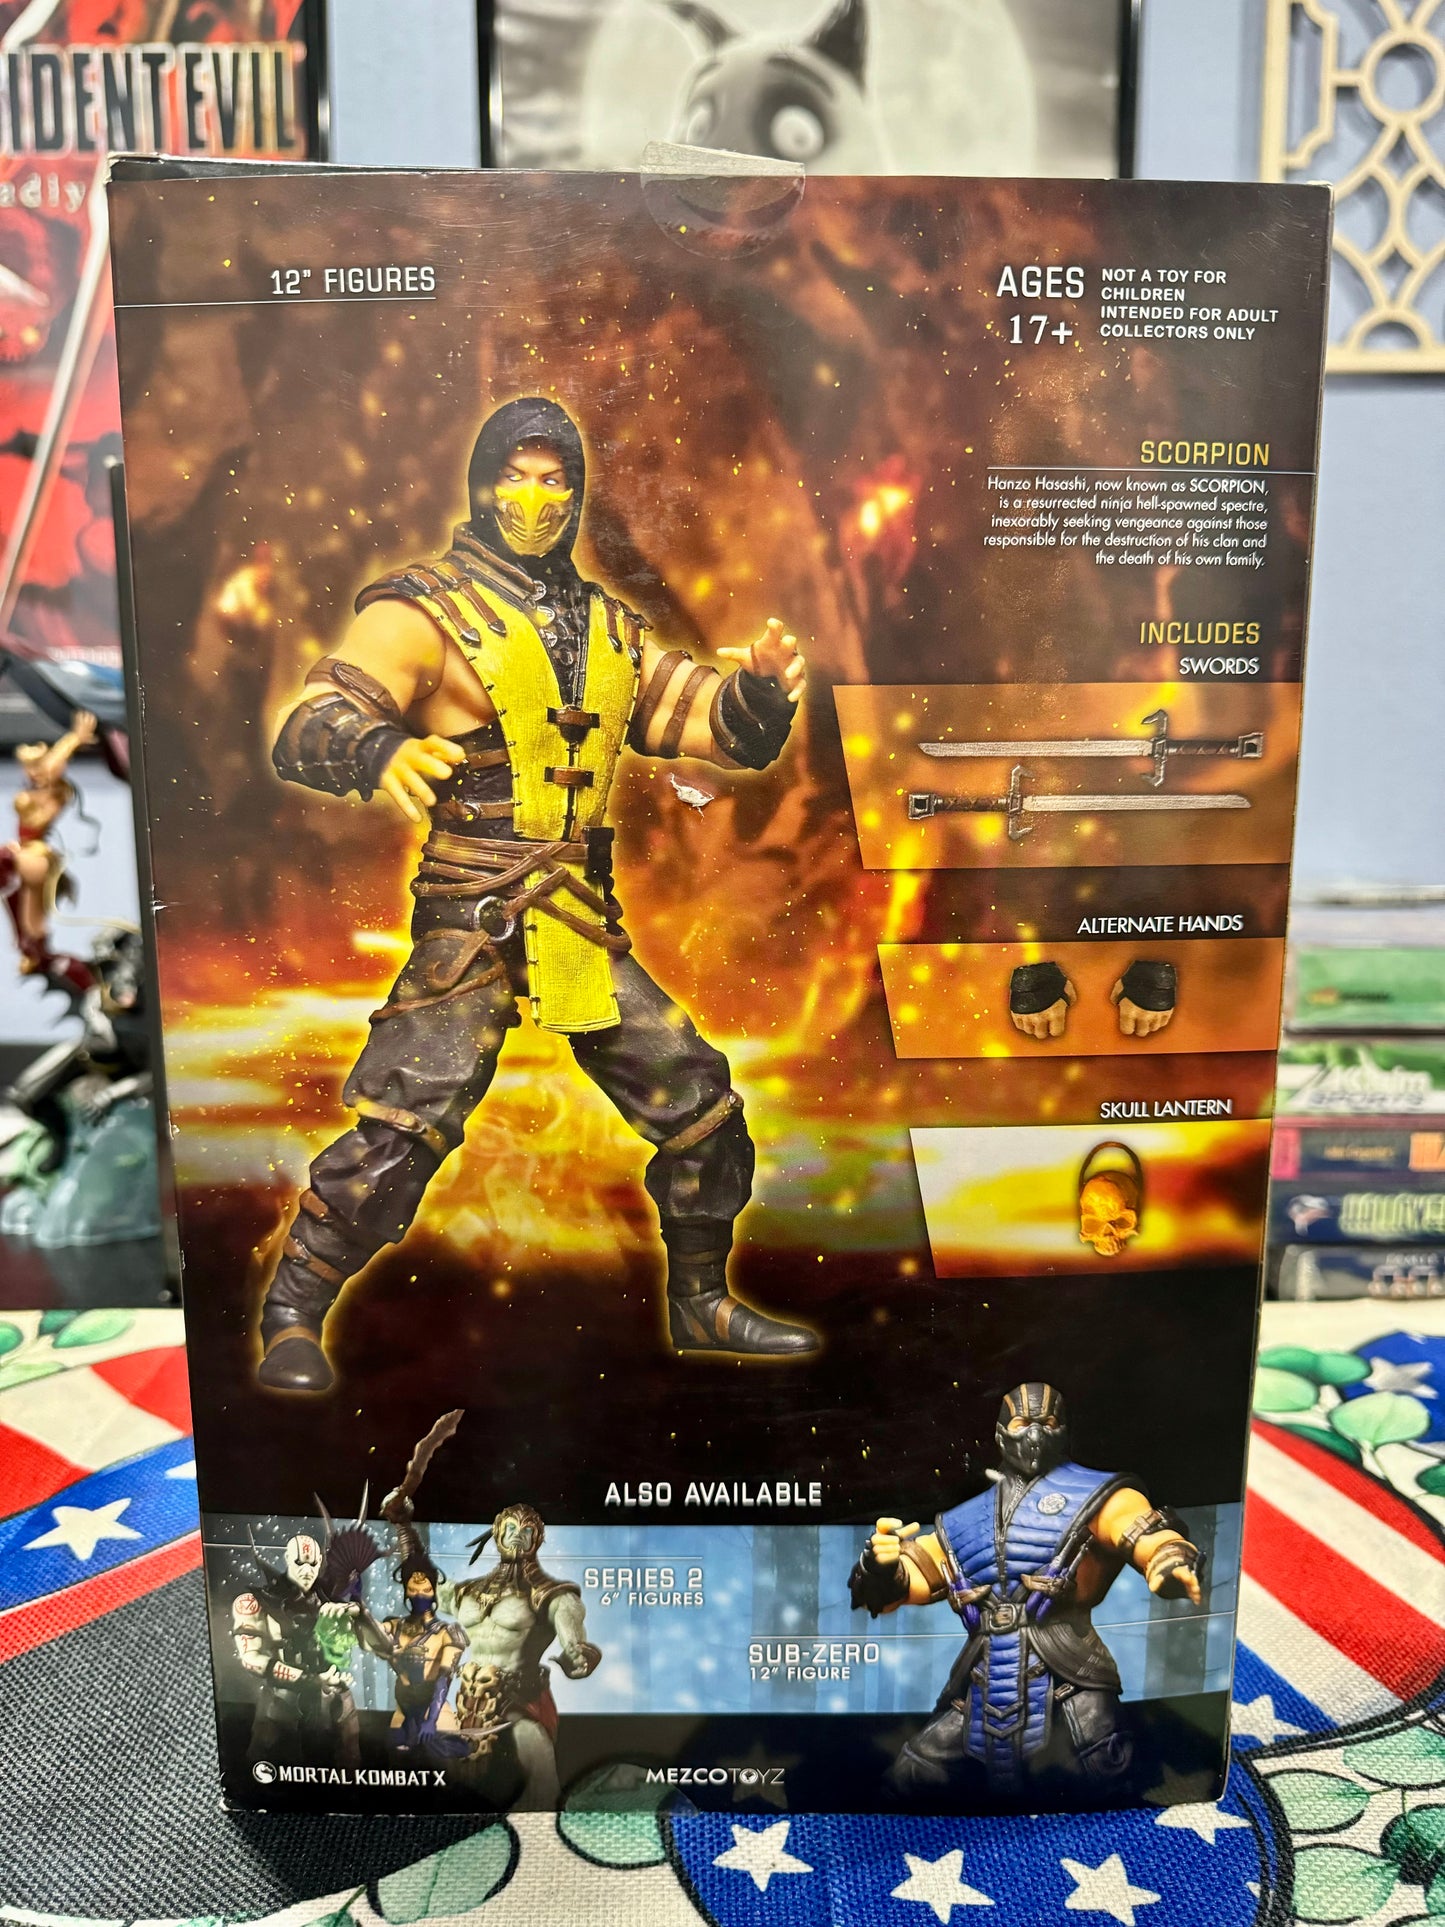 Mezco Mortal Kombat X Scorpion 12” Figure